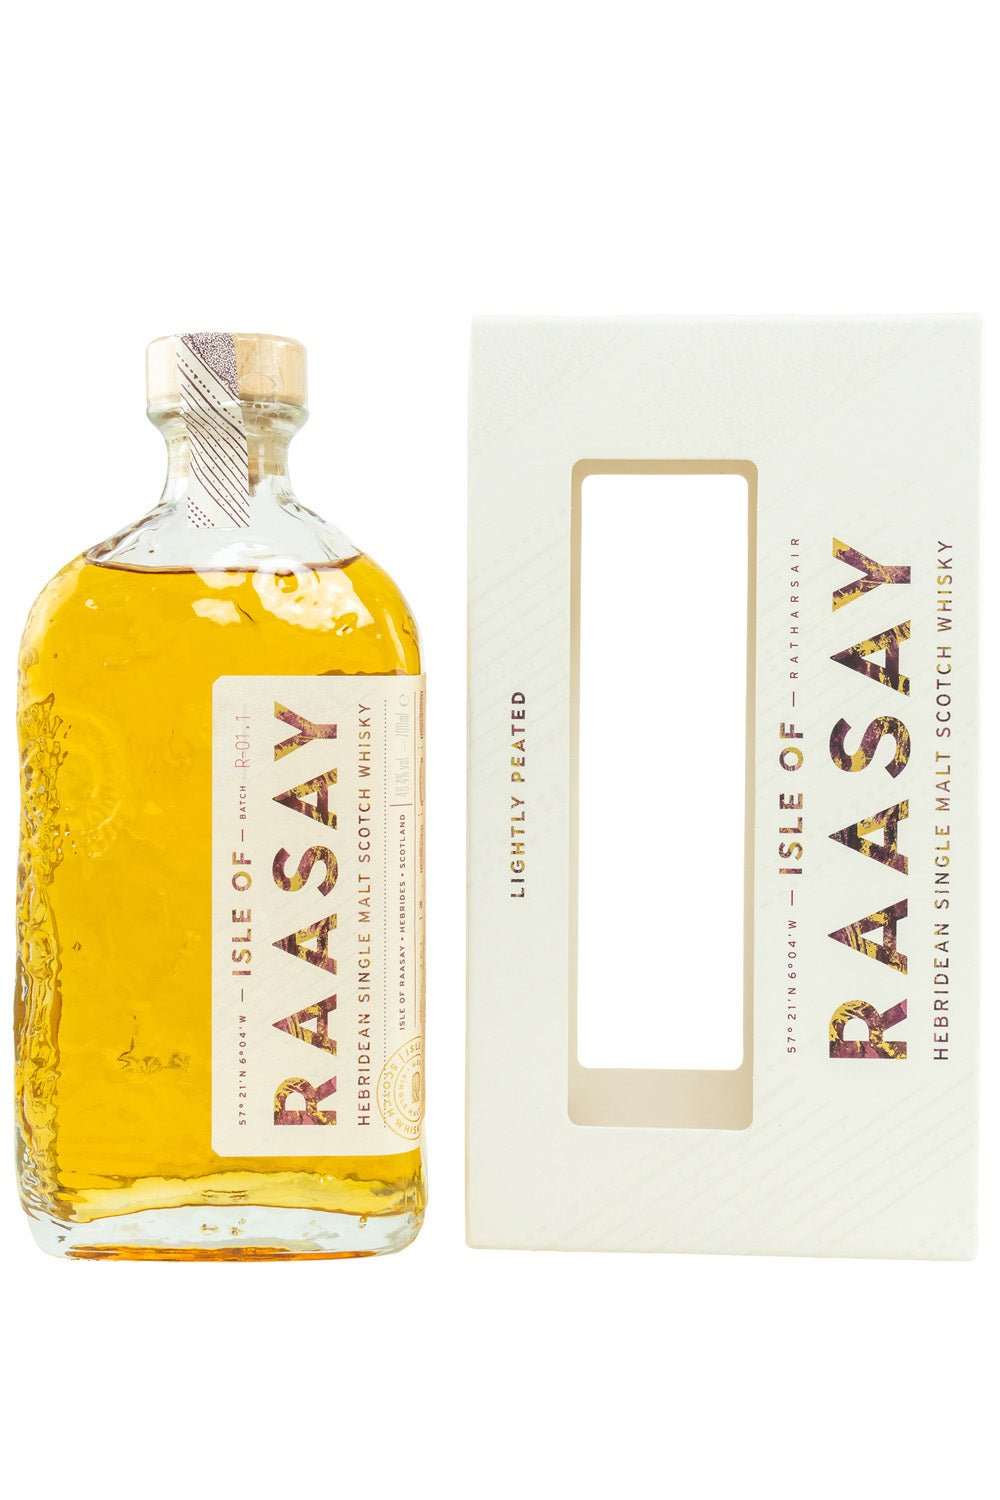 Isle of Raasay Batch R-01.1 Single Malt Hebridean Single Malt Scotch Whisky 46,4% 700ml - Maltimore